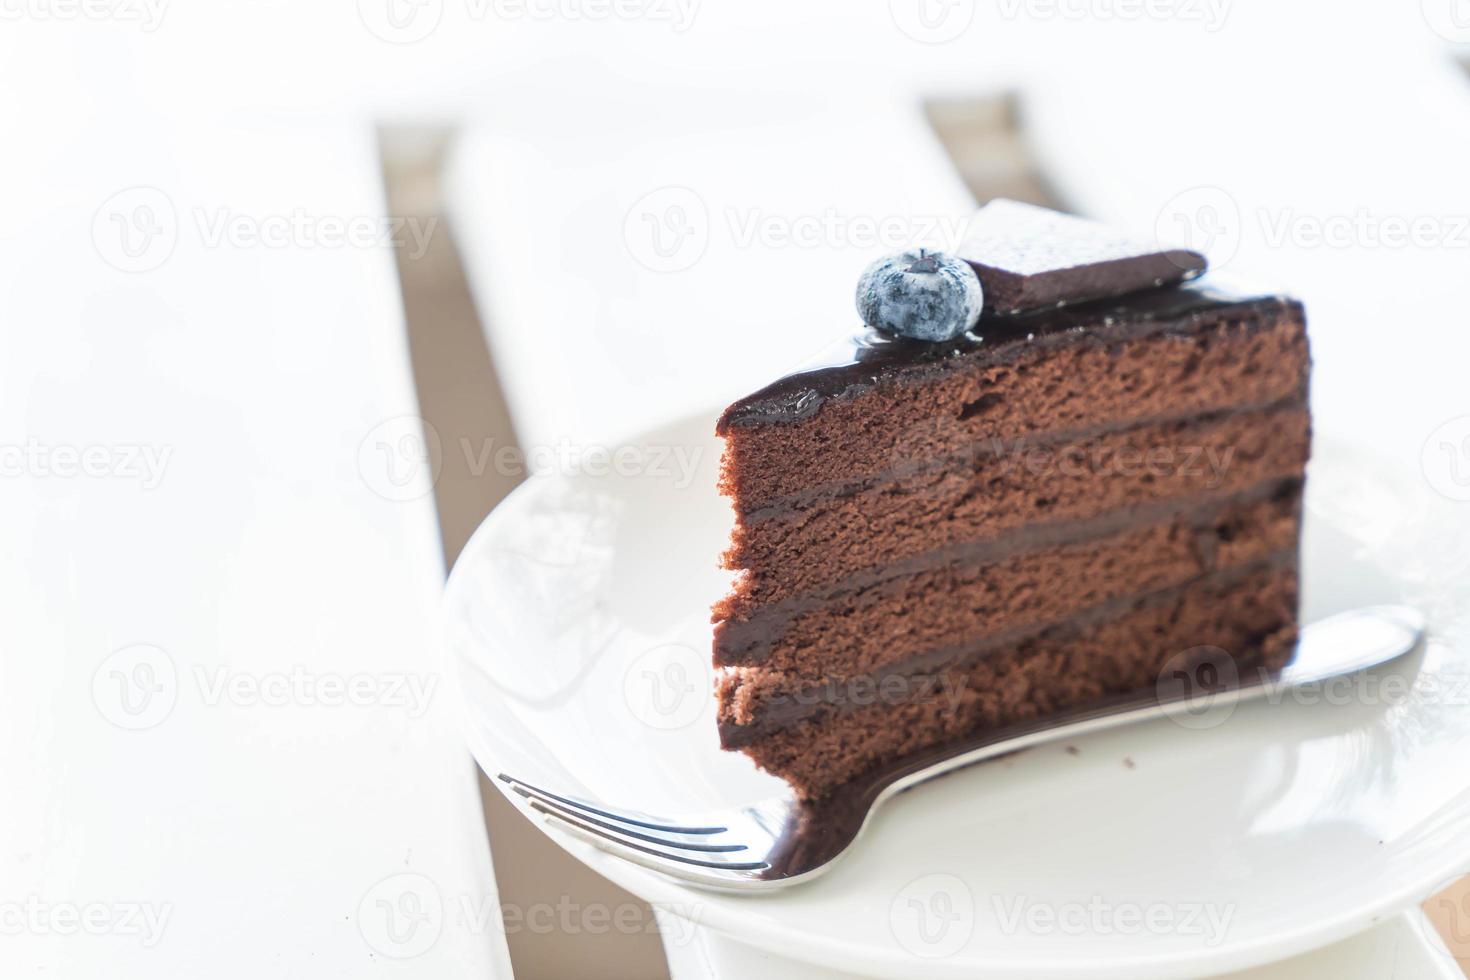 gâteau au chocolat fondant au café photo